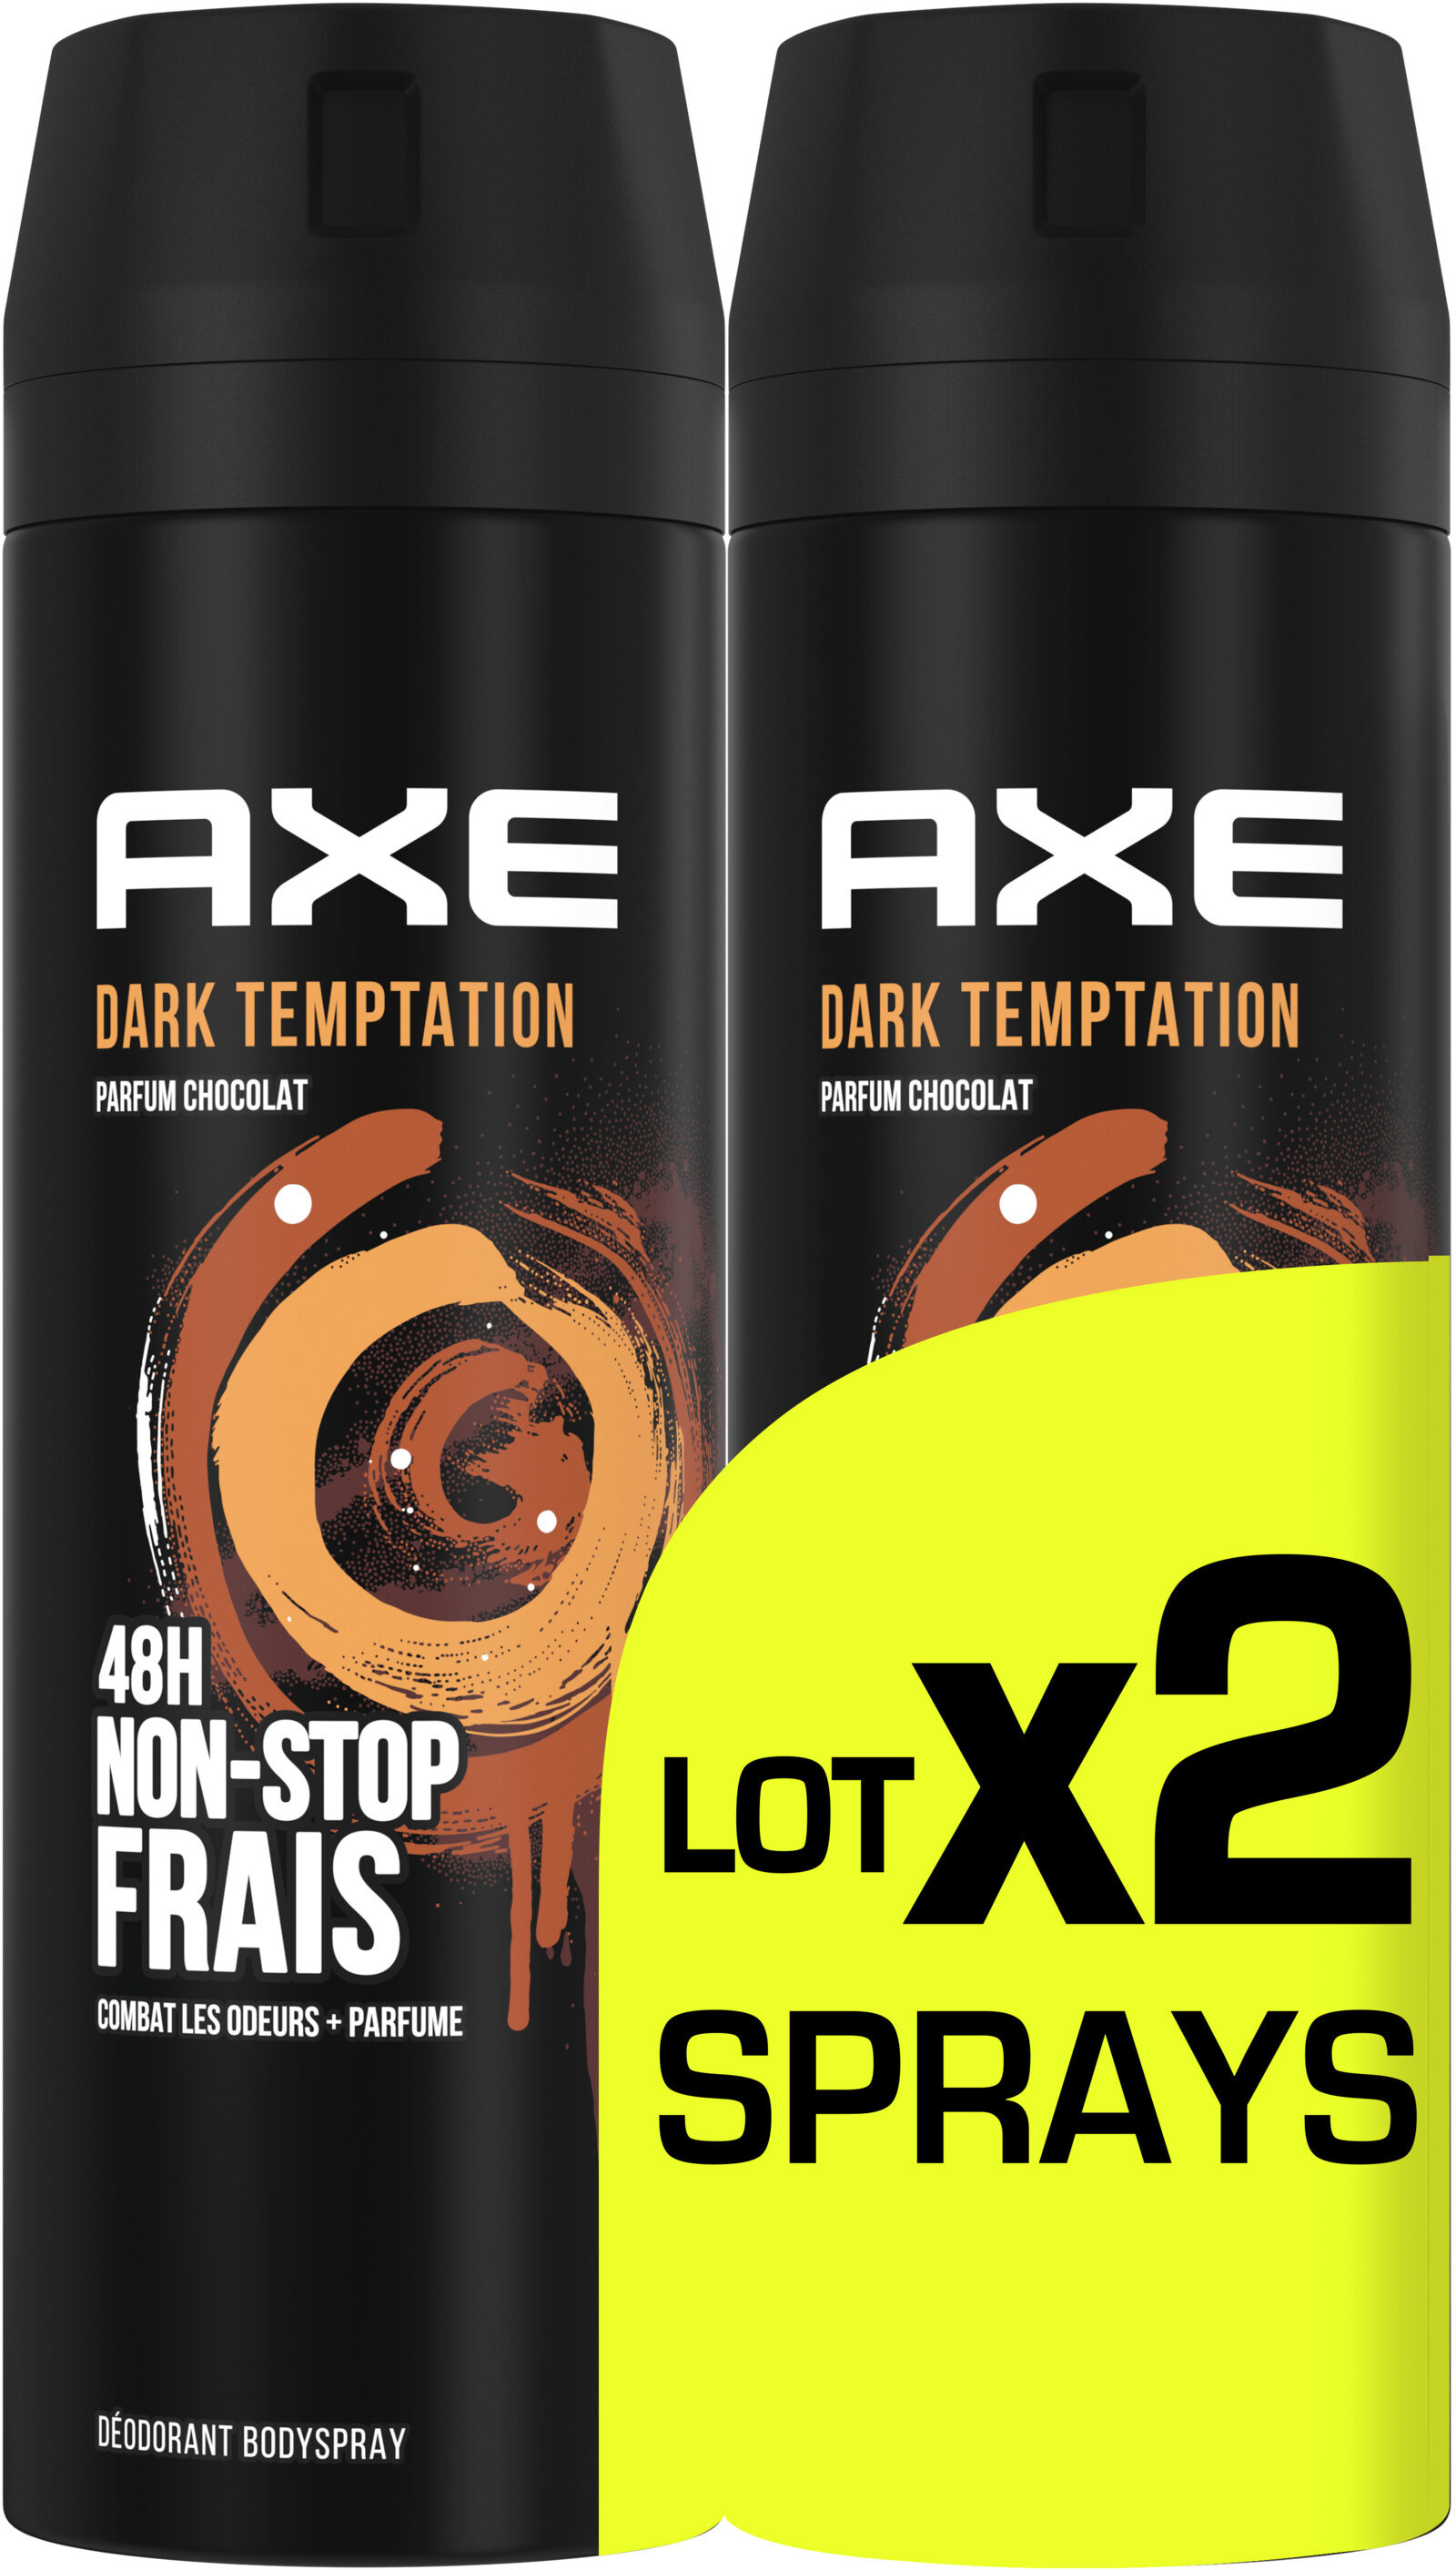 AXE Déodorant Bodyspray Homme Dark Temptation 48h Non-Stop Frais Lot 2x200ml - Product - fr